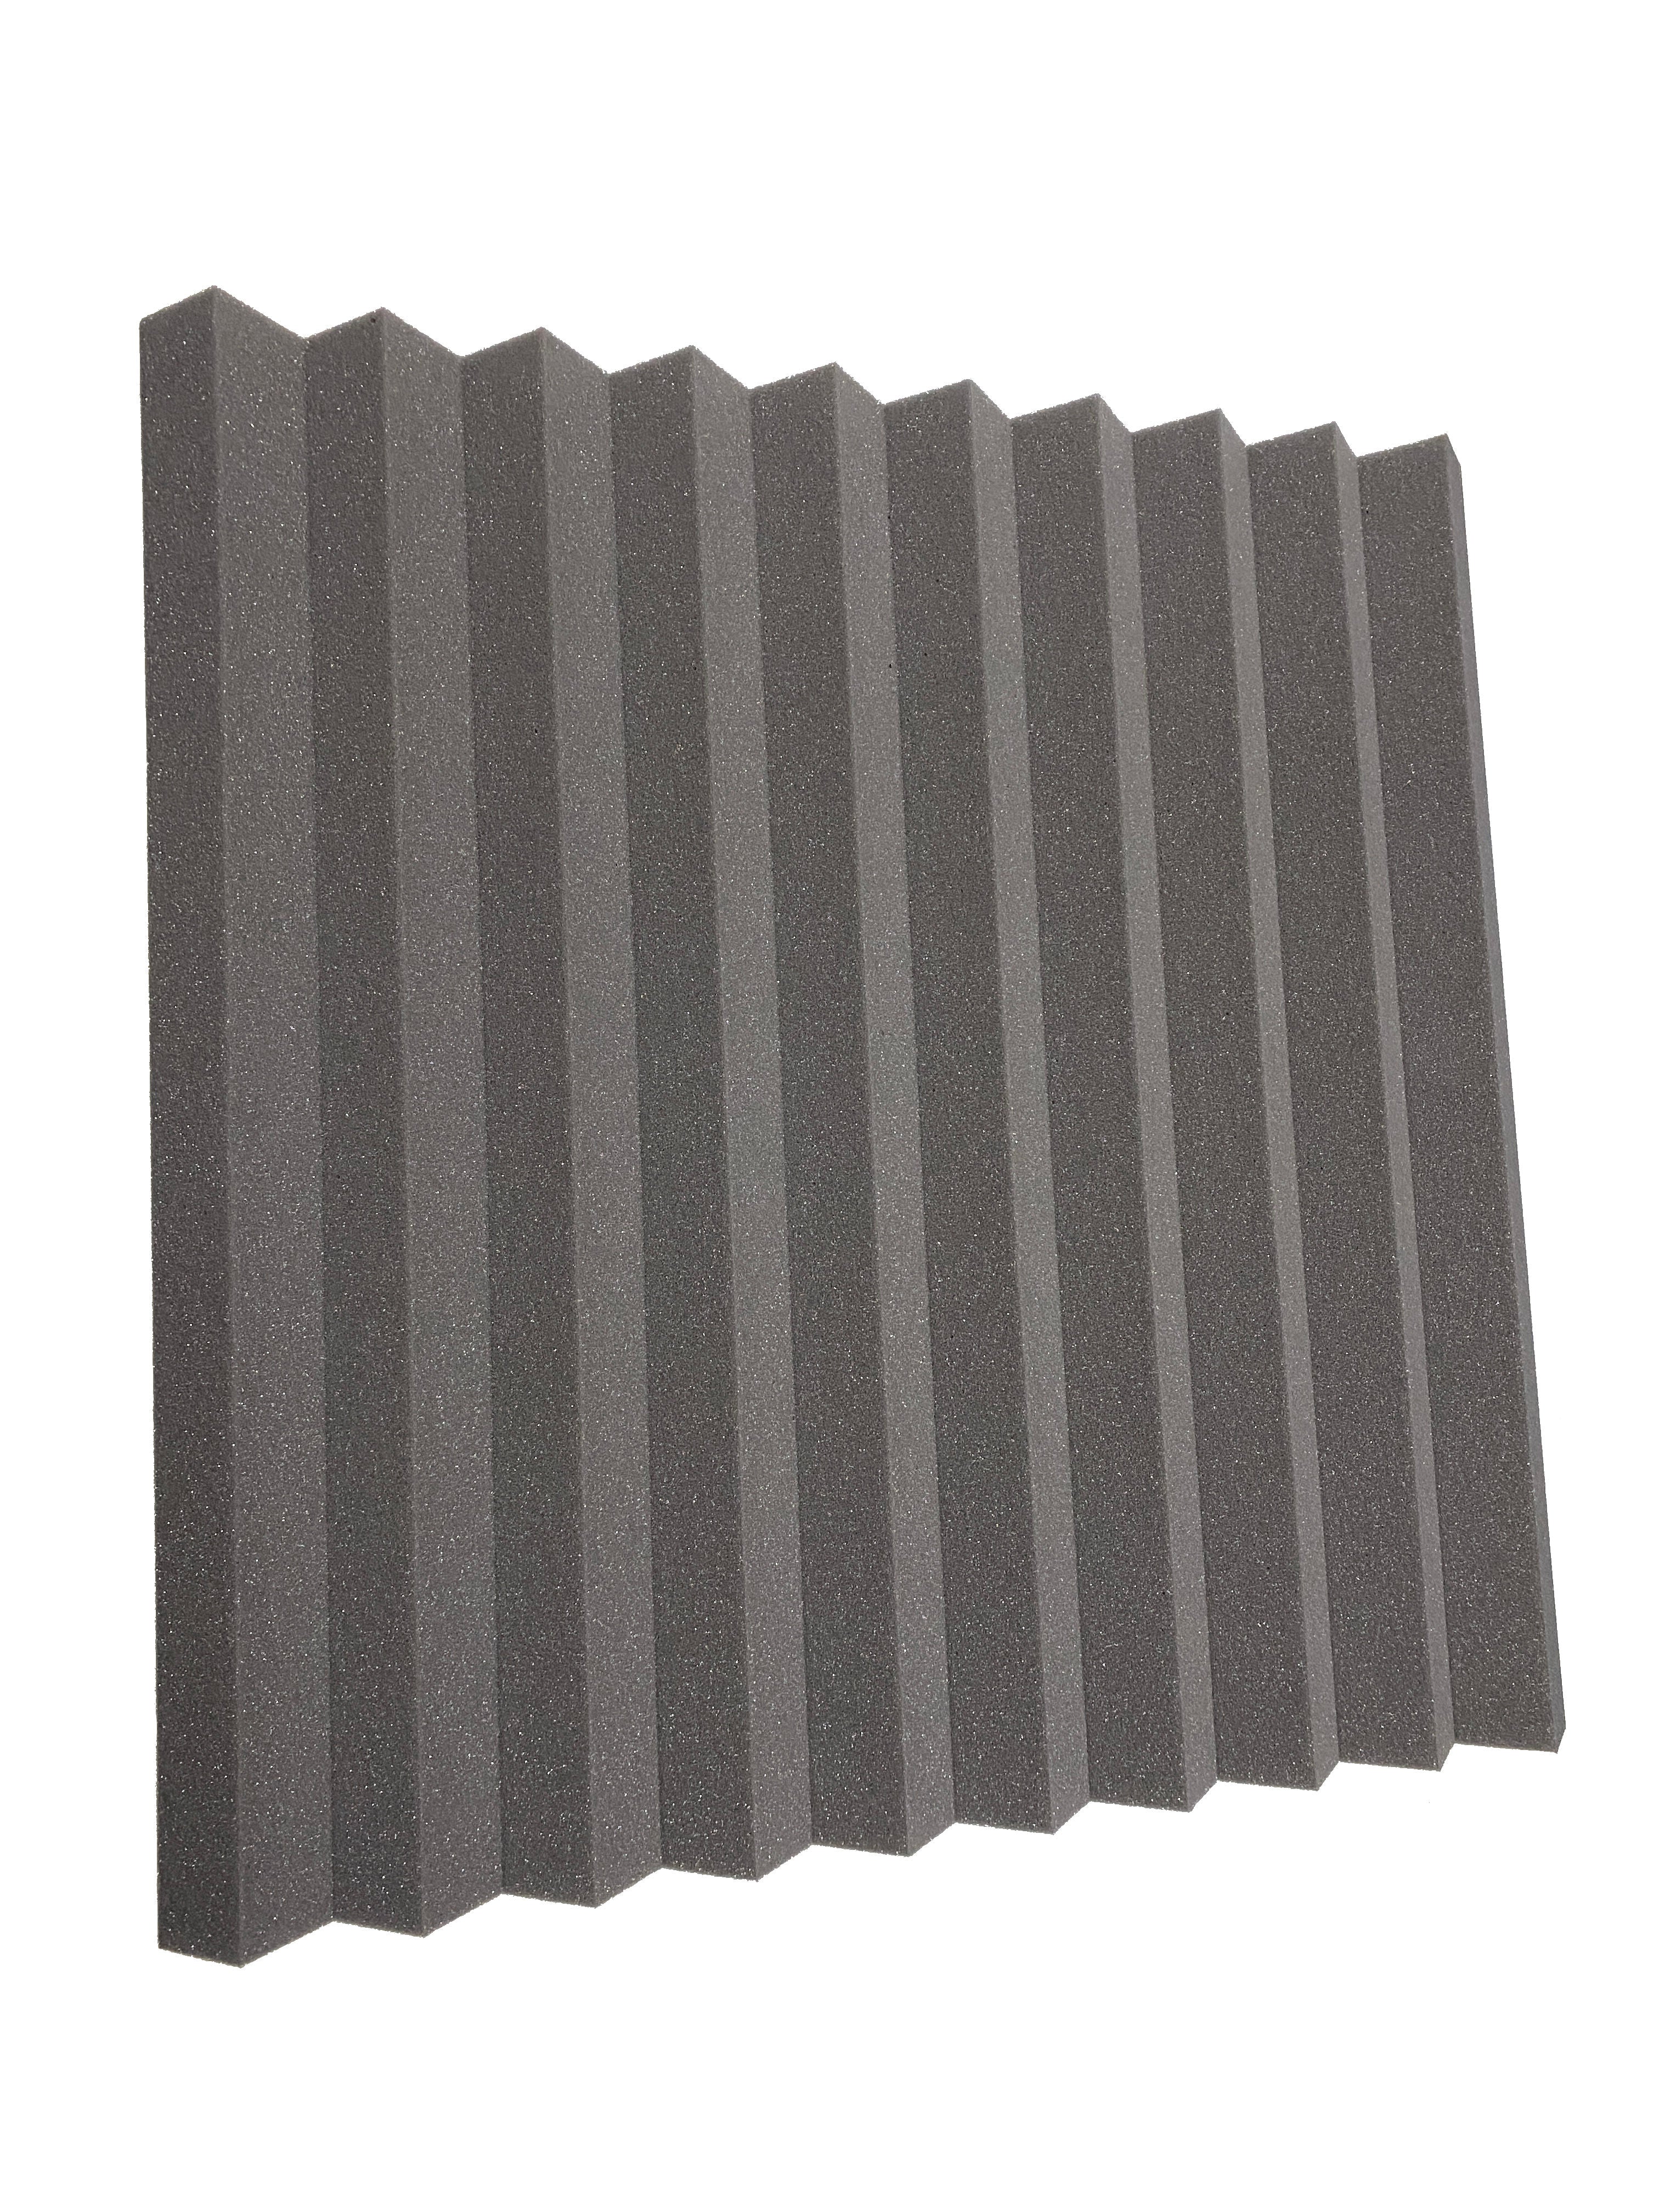 Wedge PRO 30" Acoustic Studio Foam Tile Kit-4